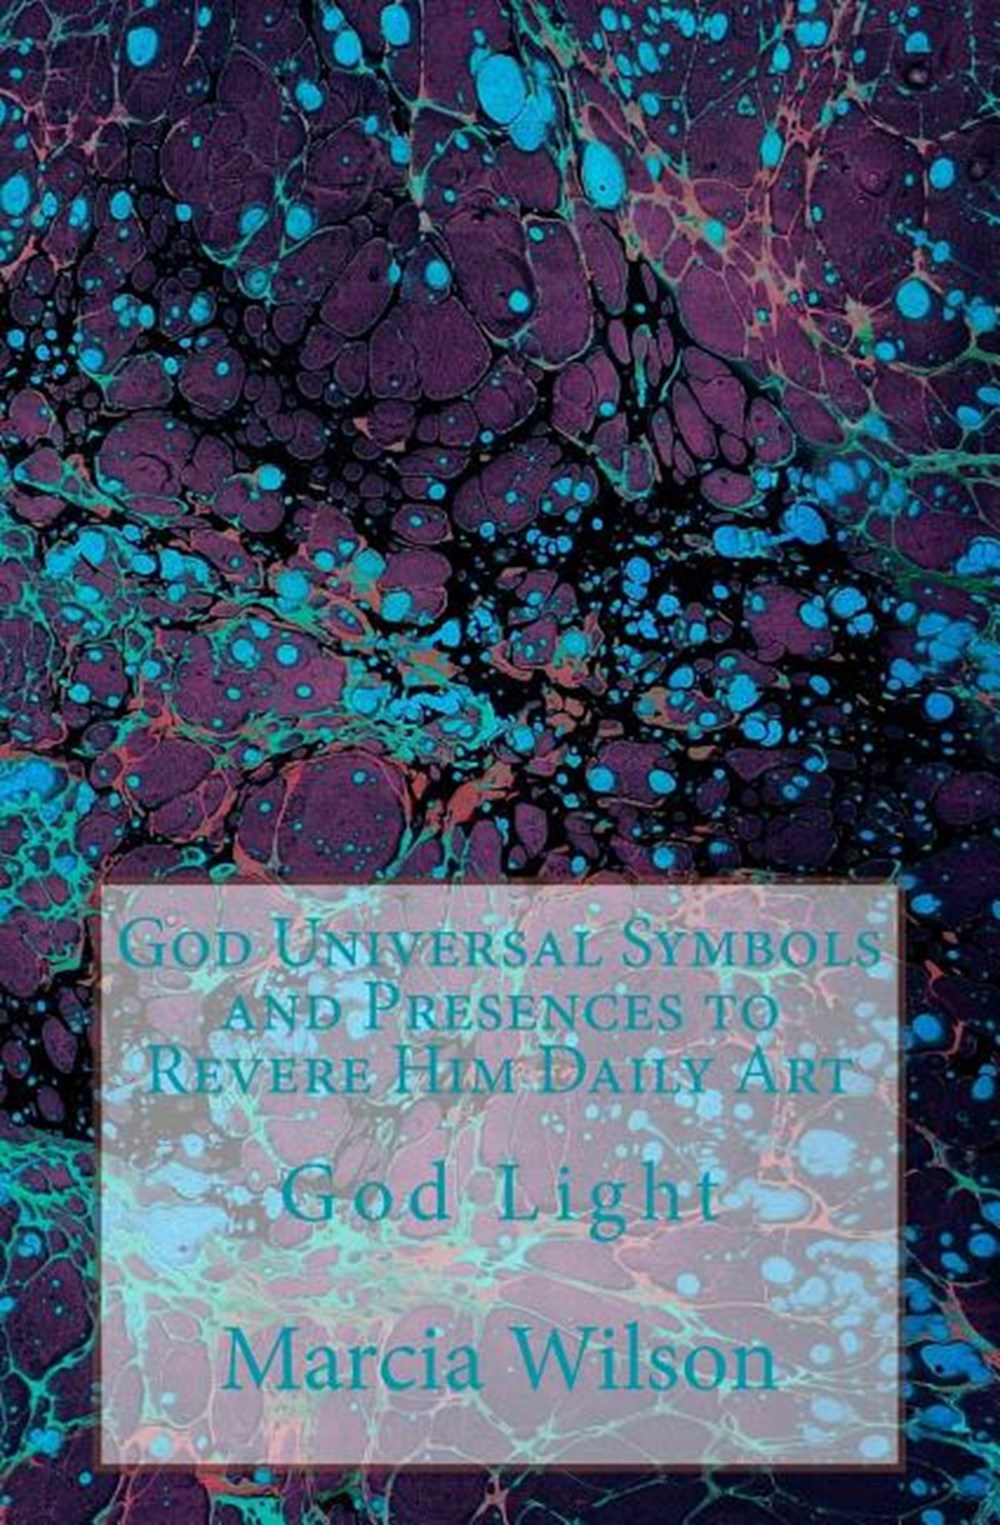 God Universal Symbols and Presences to Revere Him Daily Art: God Light